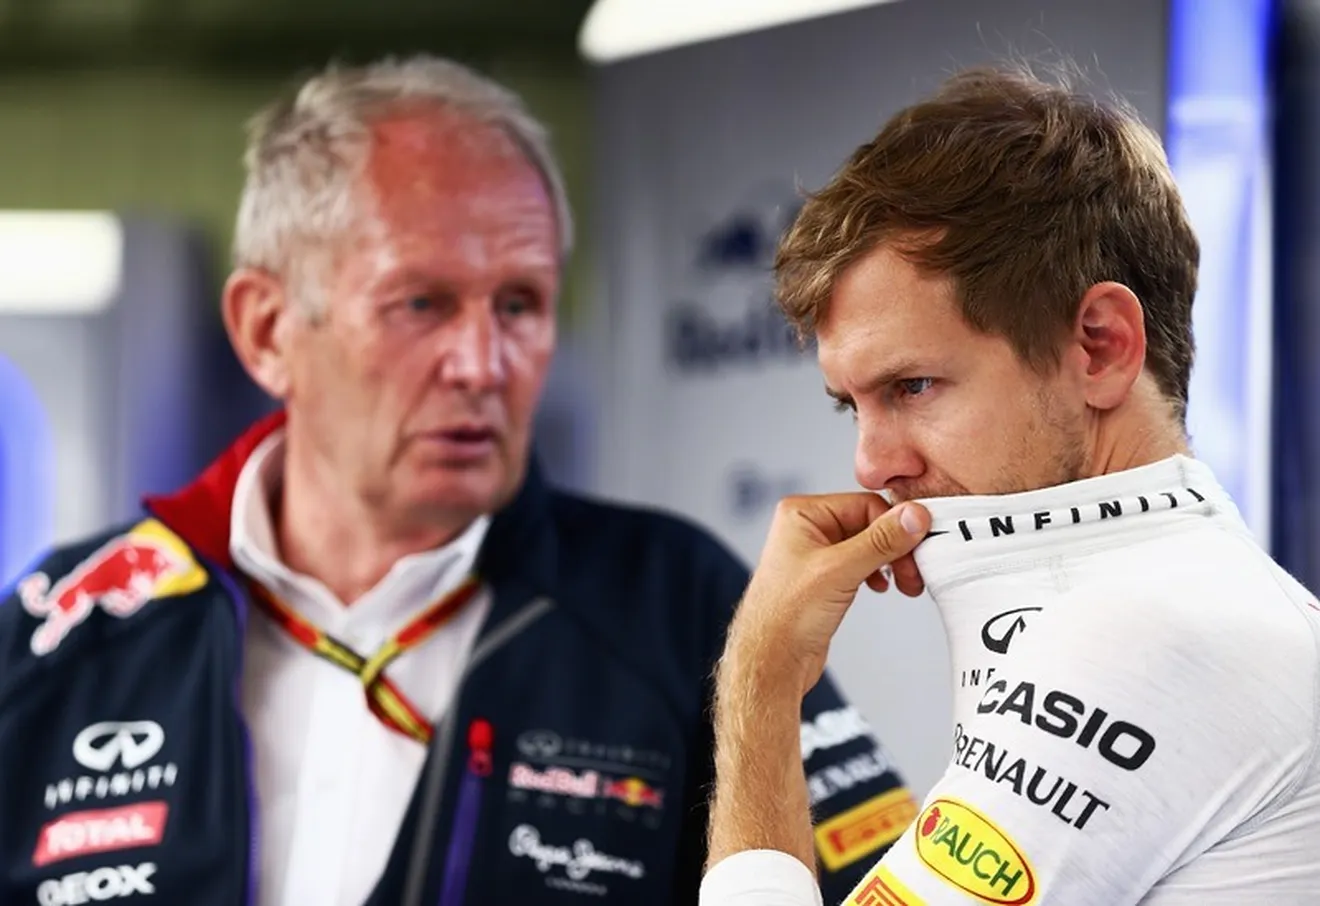 Helmut Marko señala ilegalidad en la presencia de Vettel en el box de Ferrari